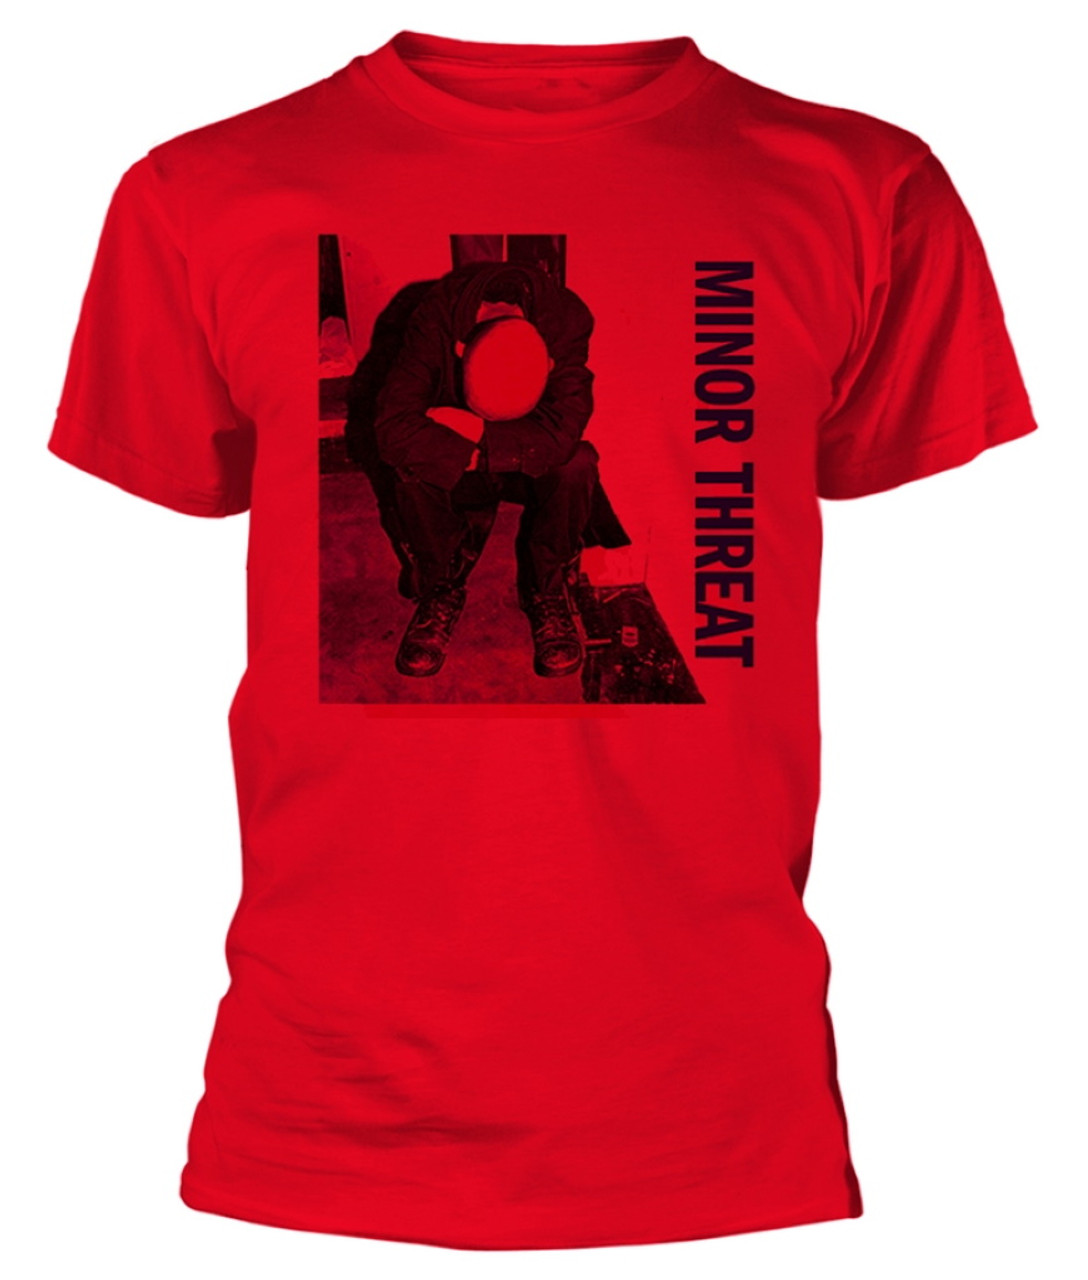 Minor Threat 'LP' (Red) T-Shirt